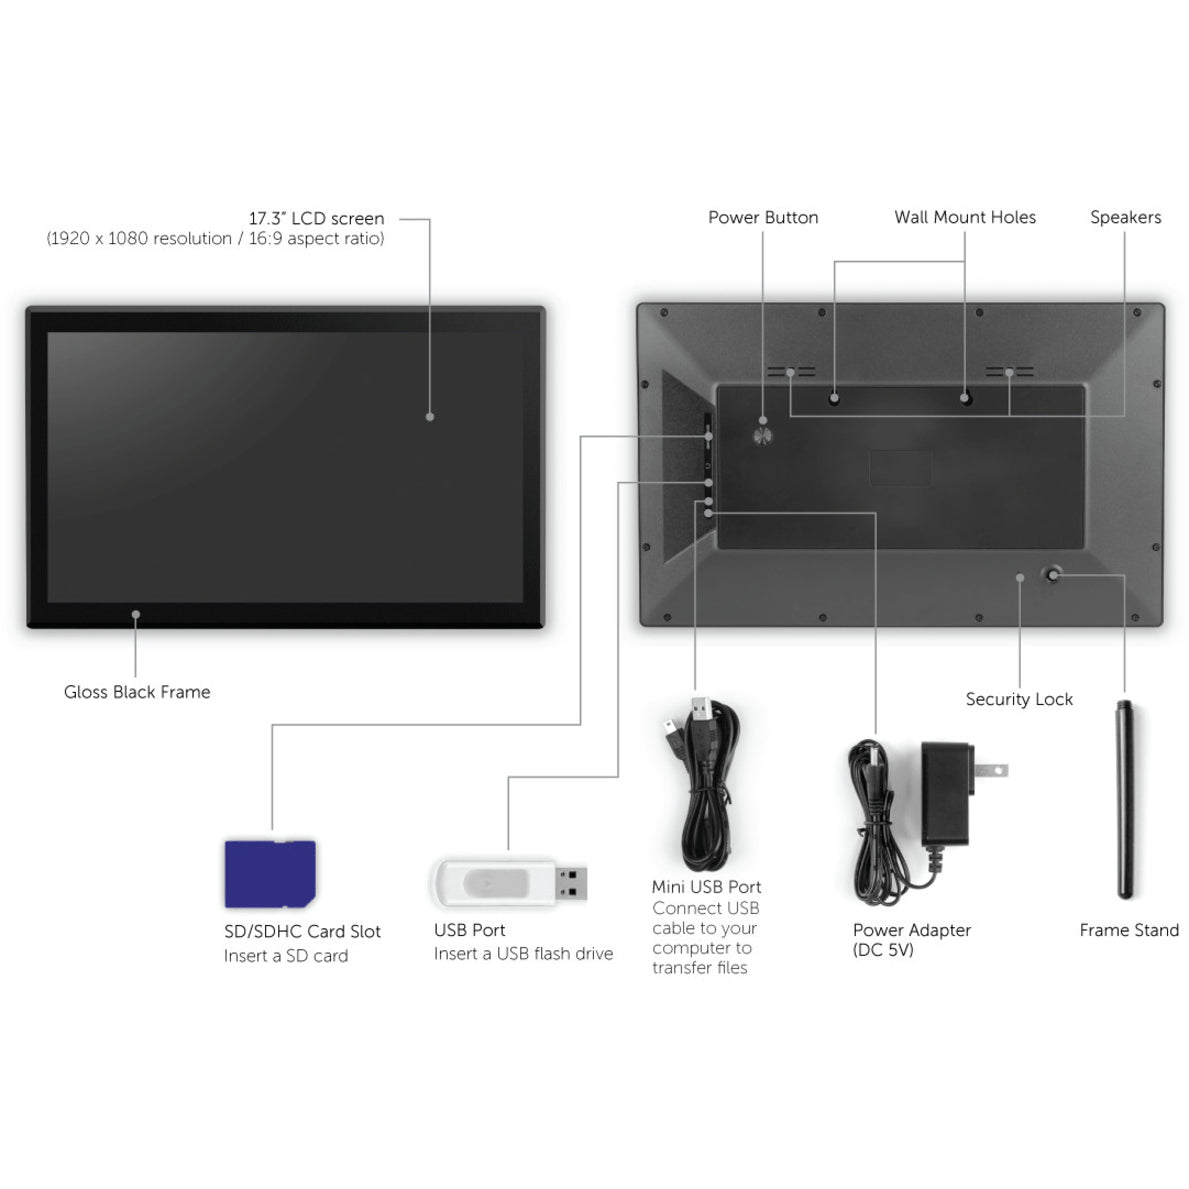 Aluratek AWS17F Digital Frame, 17.3" Touchscreen, 16GB Built-in Memory, Wall Mountable